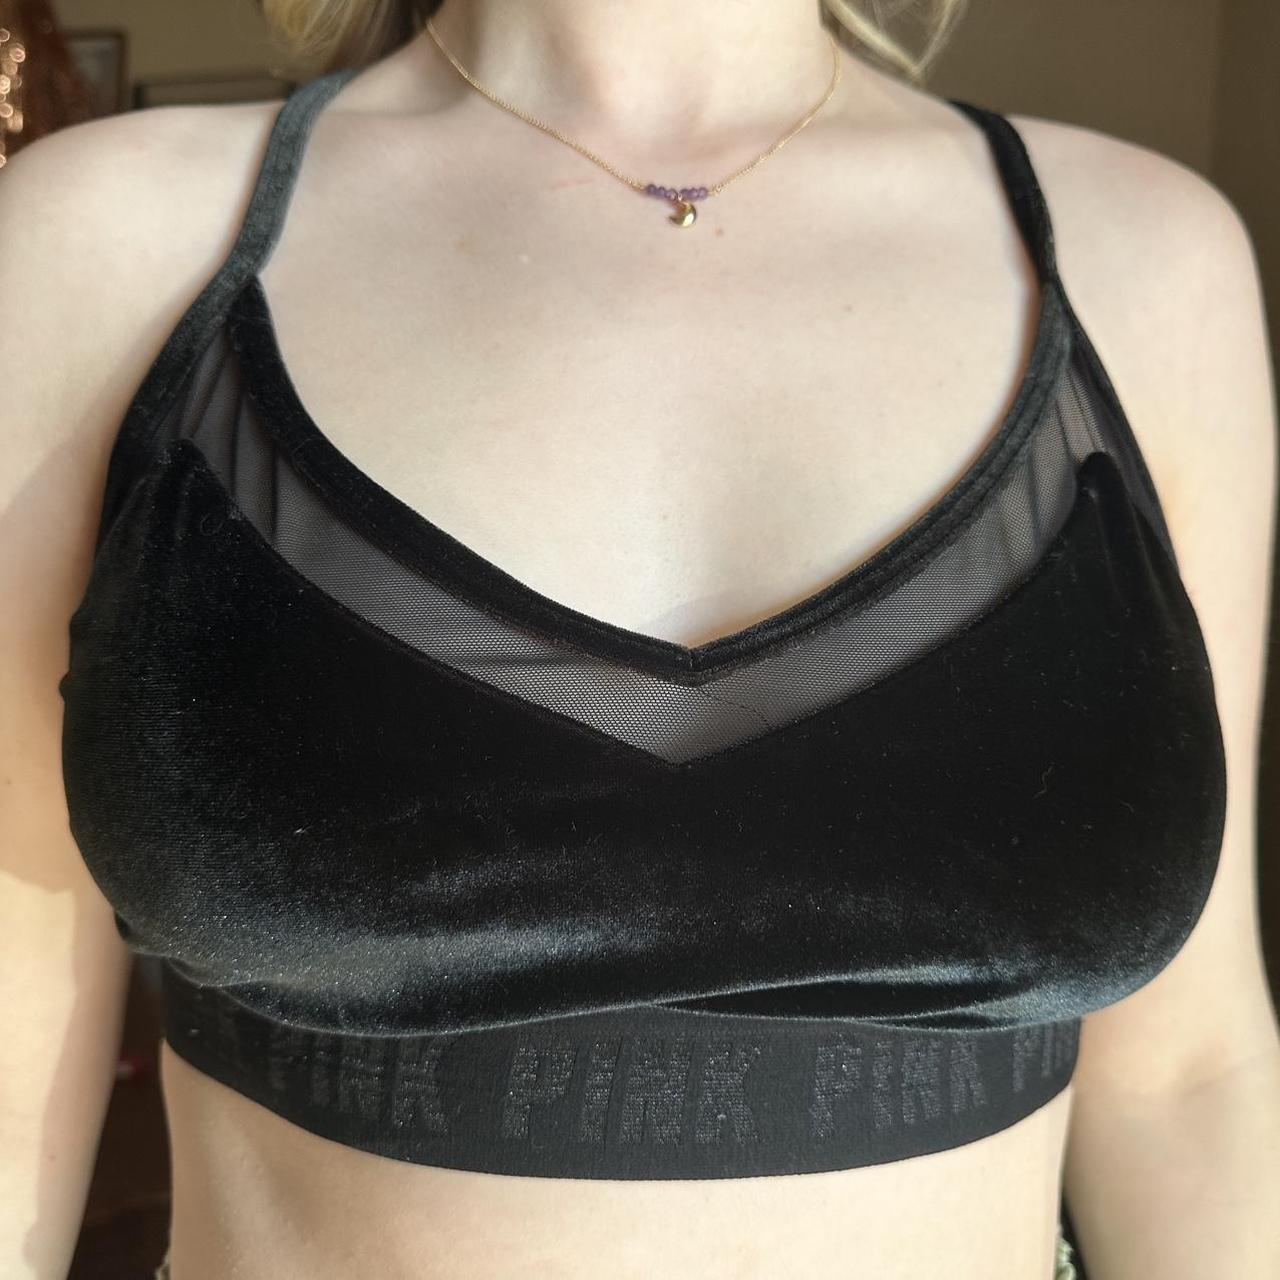 Victoria secret sports bra size xs - Depop